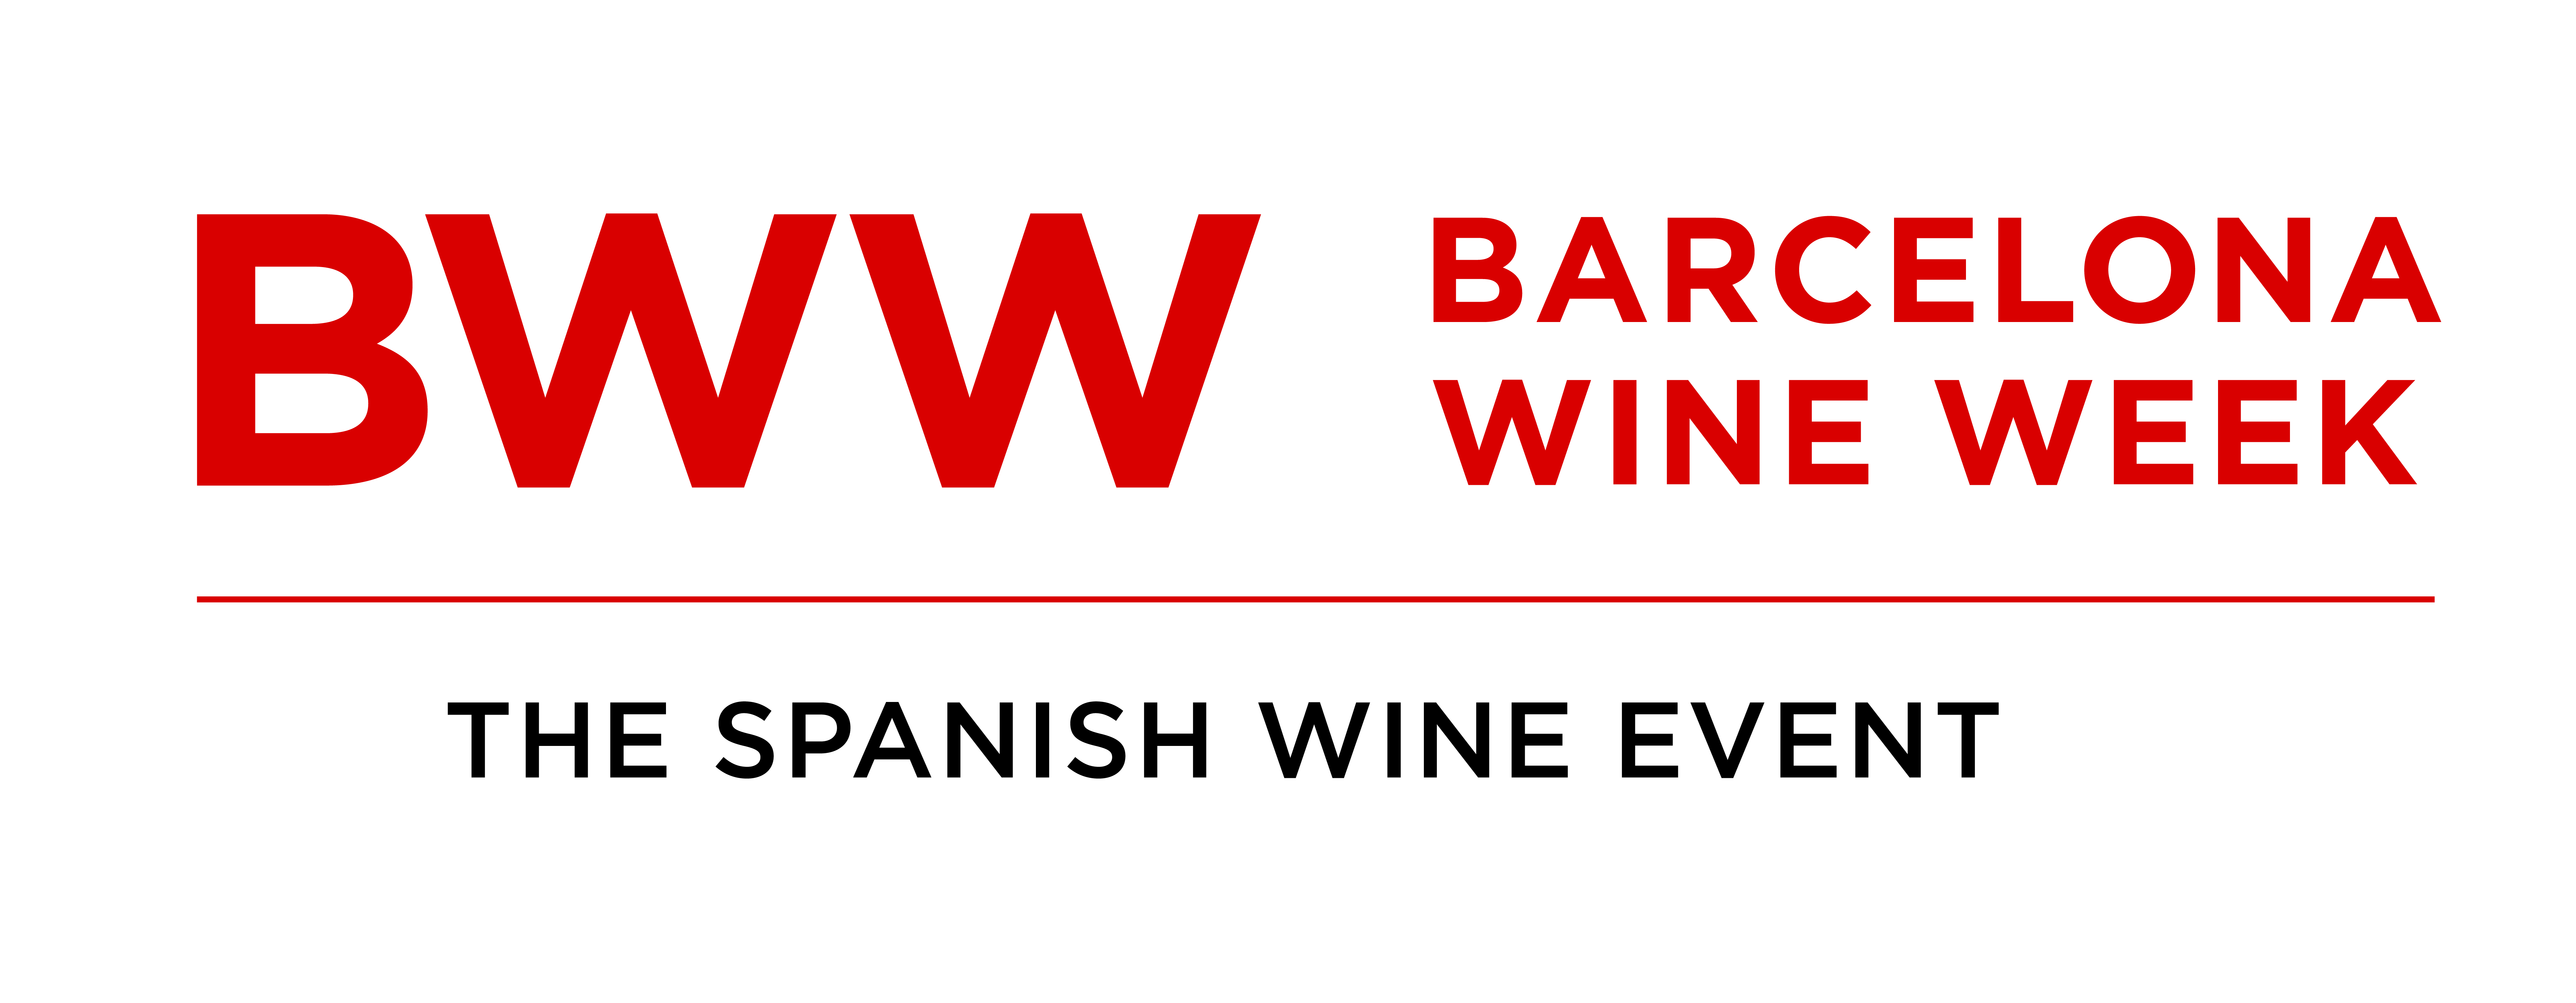 Barcelona Wine Week, Spain